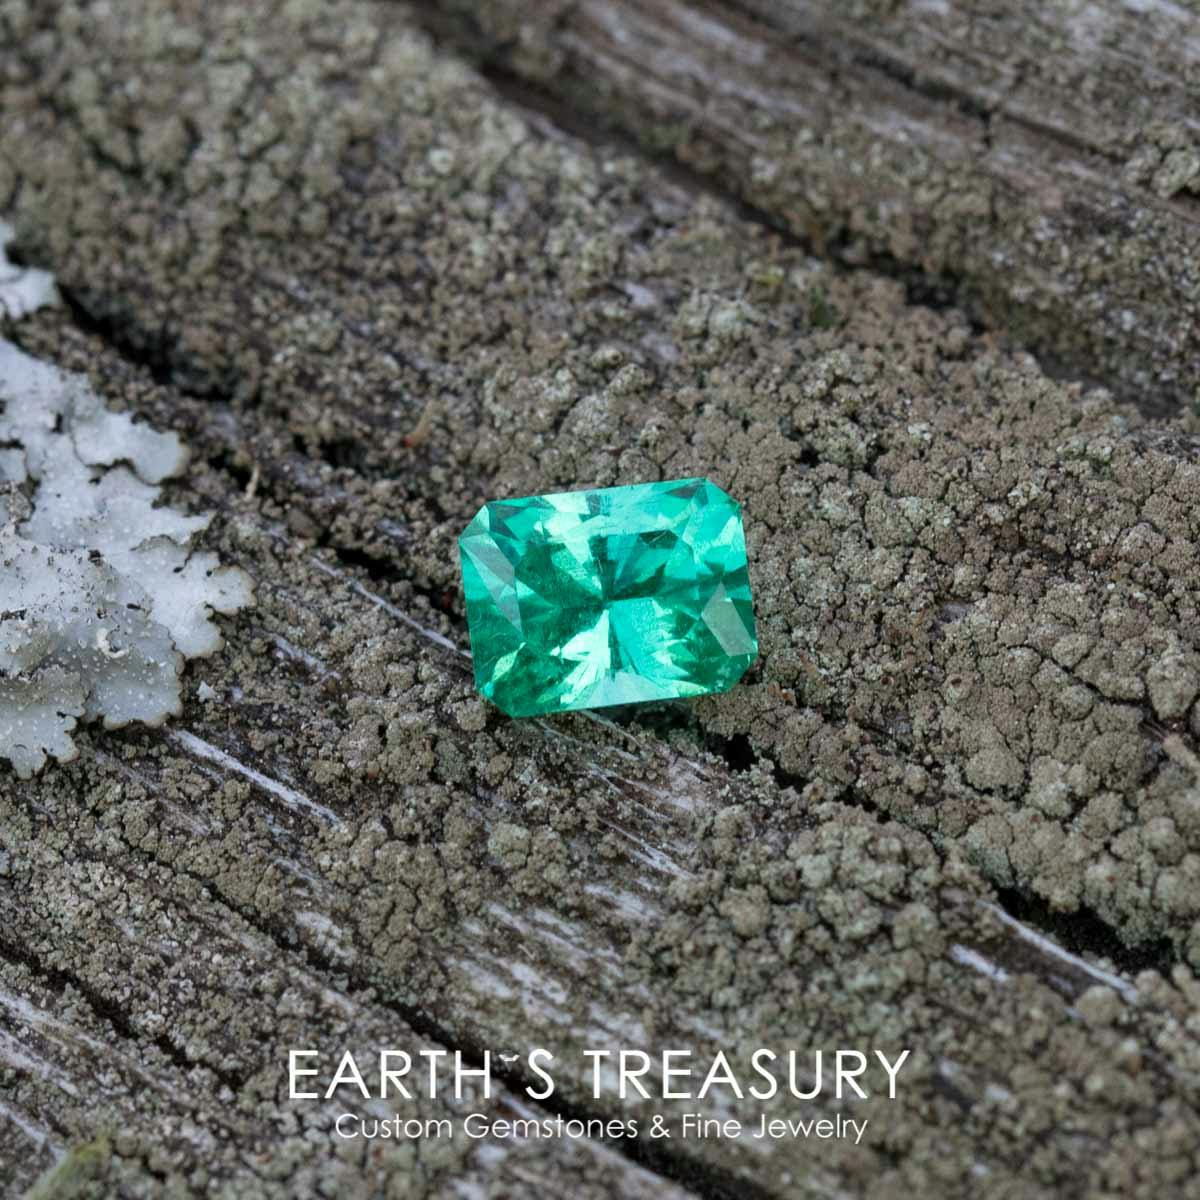 ethiopian emeralds - 1.48 ct bright green